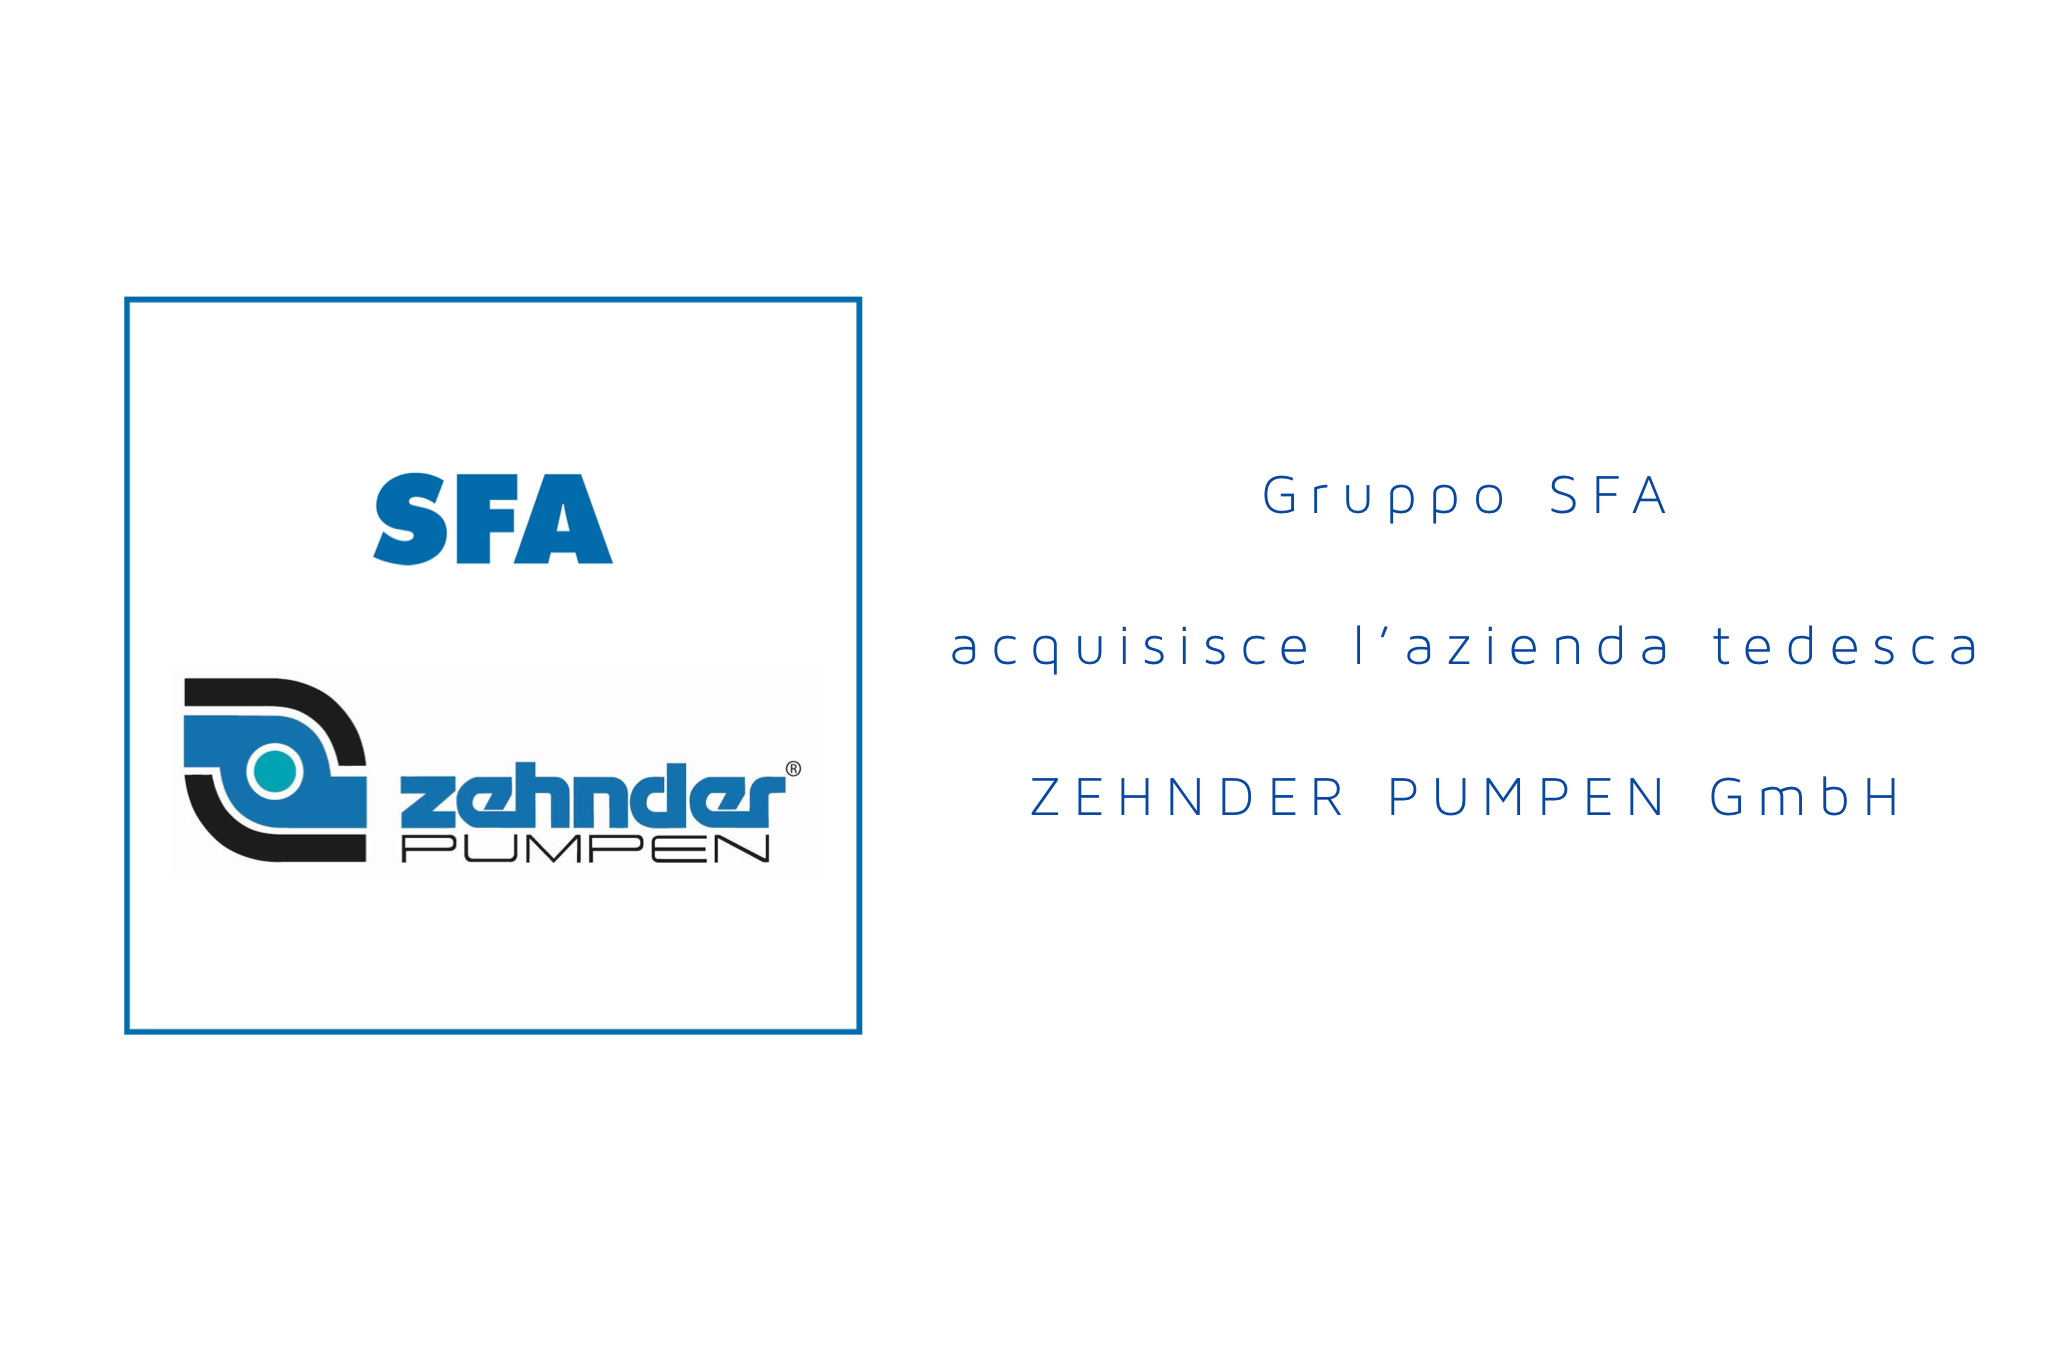 Gruppo SFA acquisisce Zehnder Pumpen GmbH